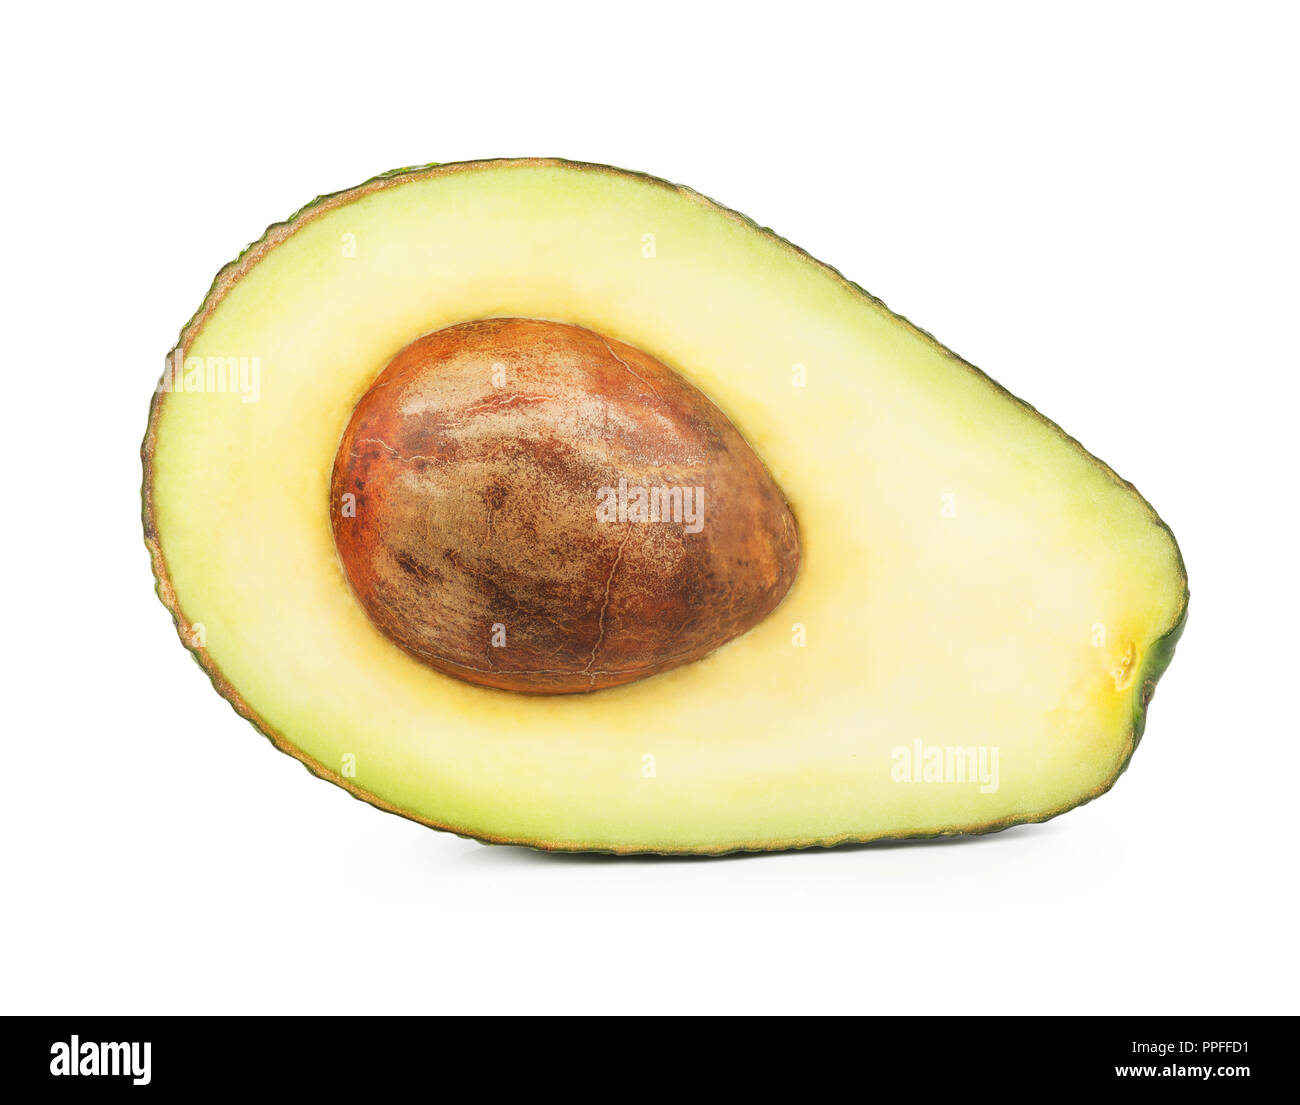 Ripe half avocado isolated on white background Stock Photo